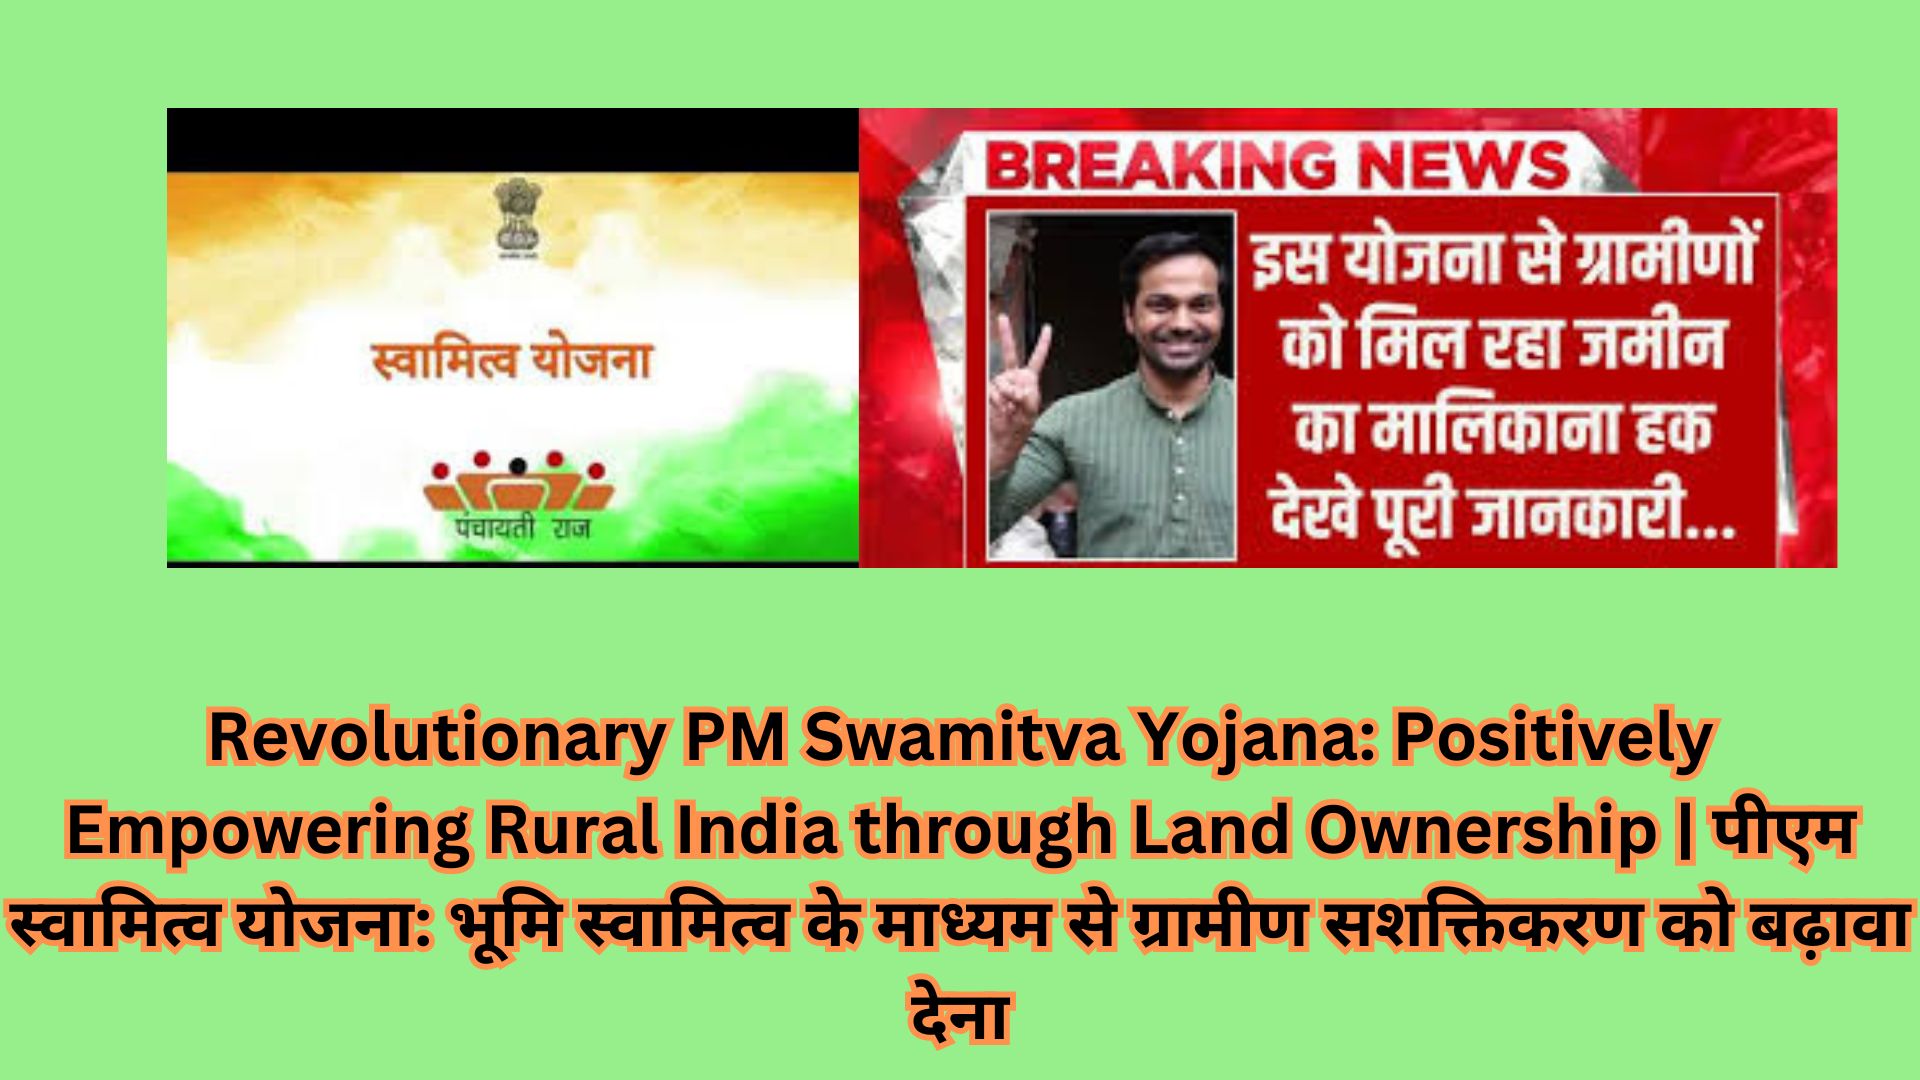 Revolutionary PM Swamitva Yojana: Positively Empowering Rural India through Land Ownership | पीएम स्वामित्व योजना: भूमि स्वामित्व के माध्यम से ग्रामीण सशक्तिकरण को बढ़ावा देना